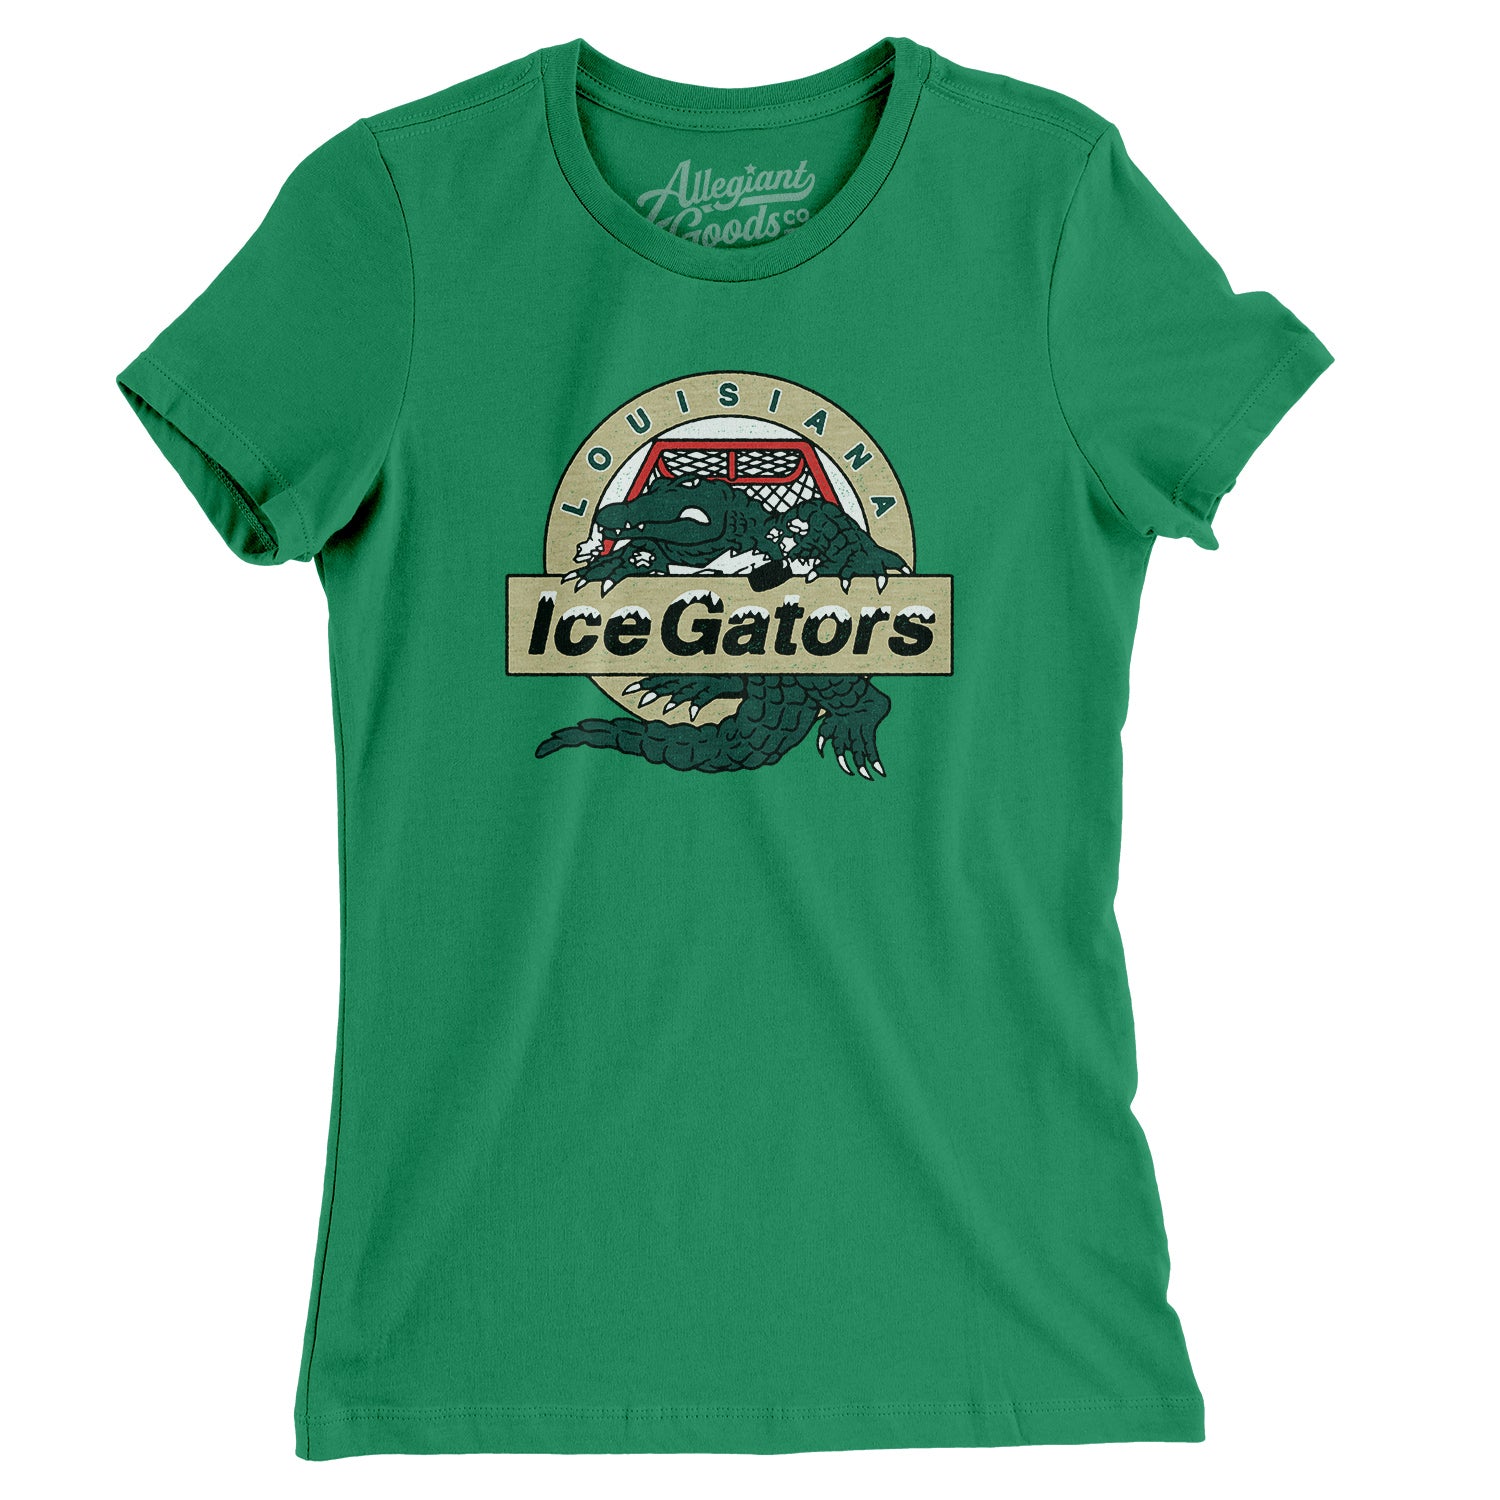 Mtr Louisiana Ice Gators Defunct Hockey Women's T-Shirt Asphalt / S